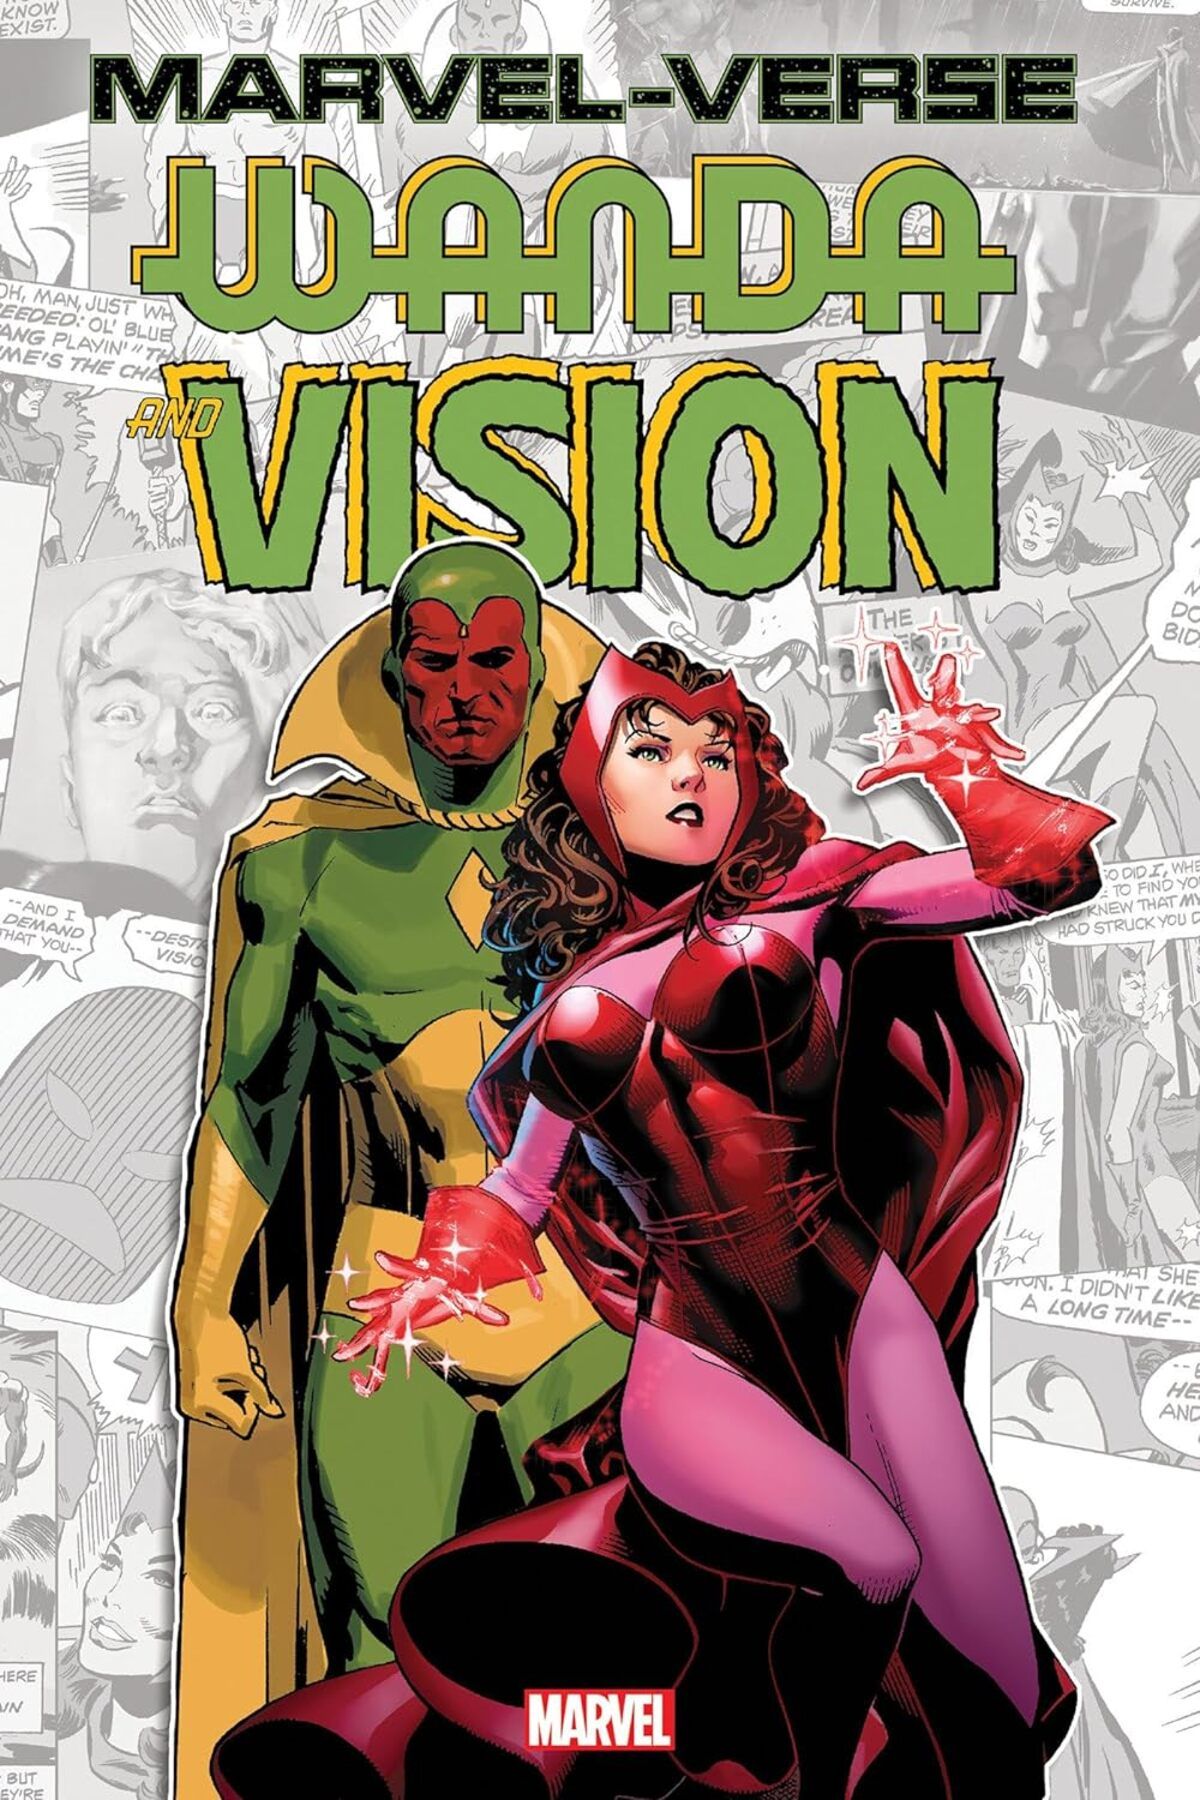 MARVEL -verse: Wanda & Vision